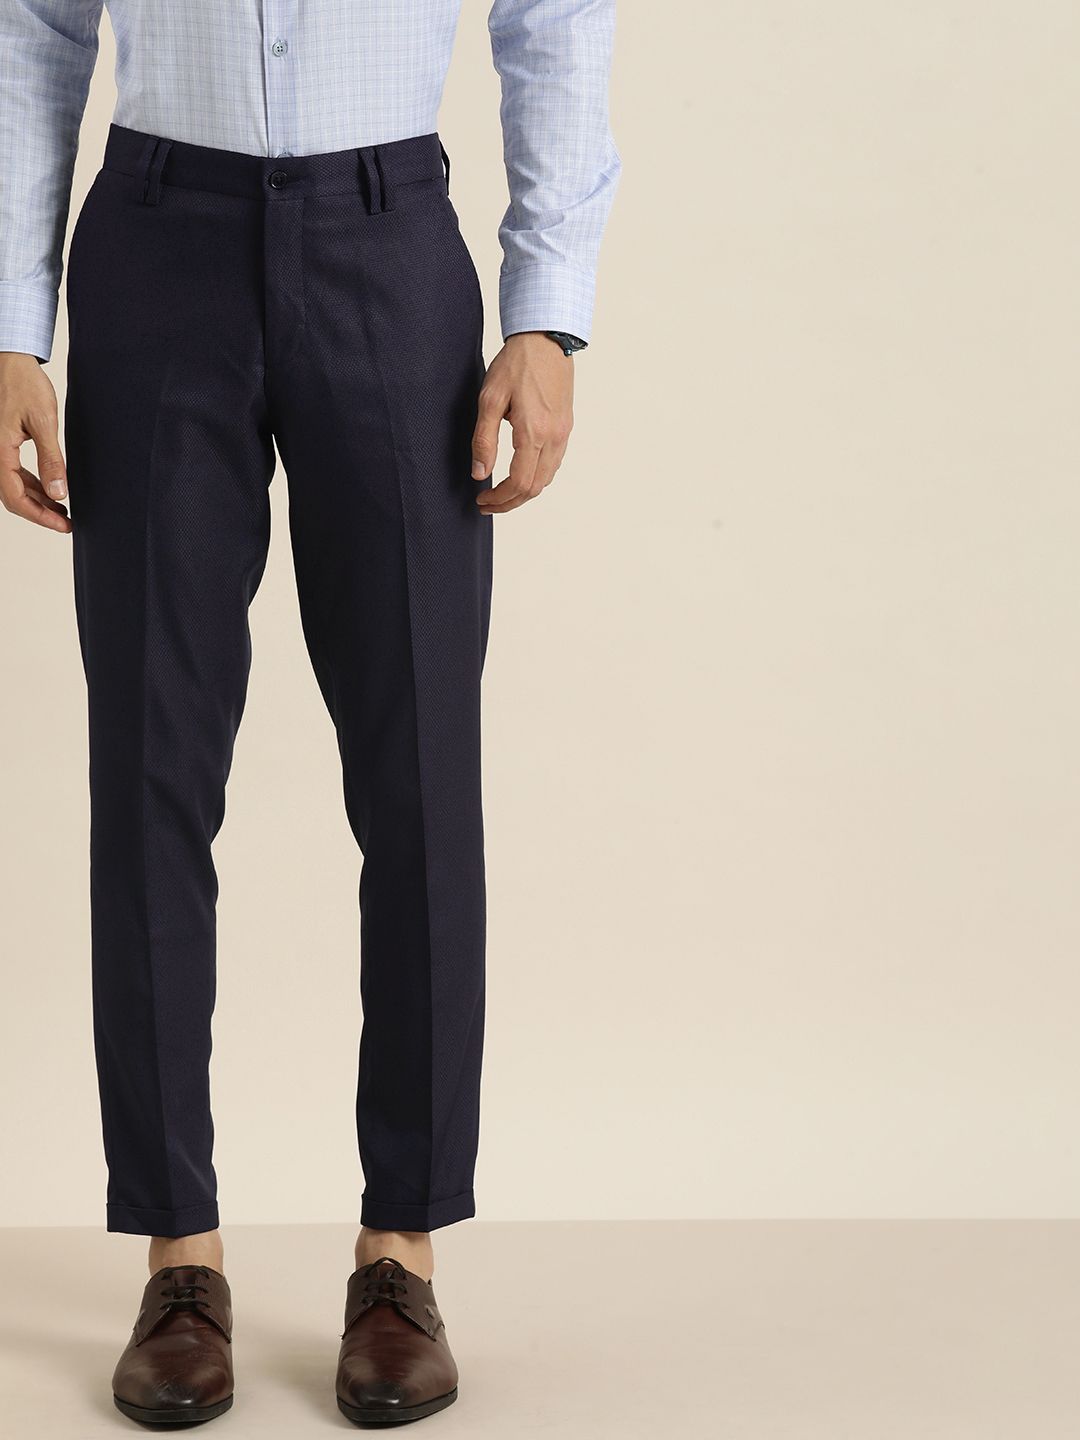 Buy Men Beige  OffWhite Selfdesign Slim Fit Formal Trousers online   Looksgudin